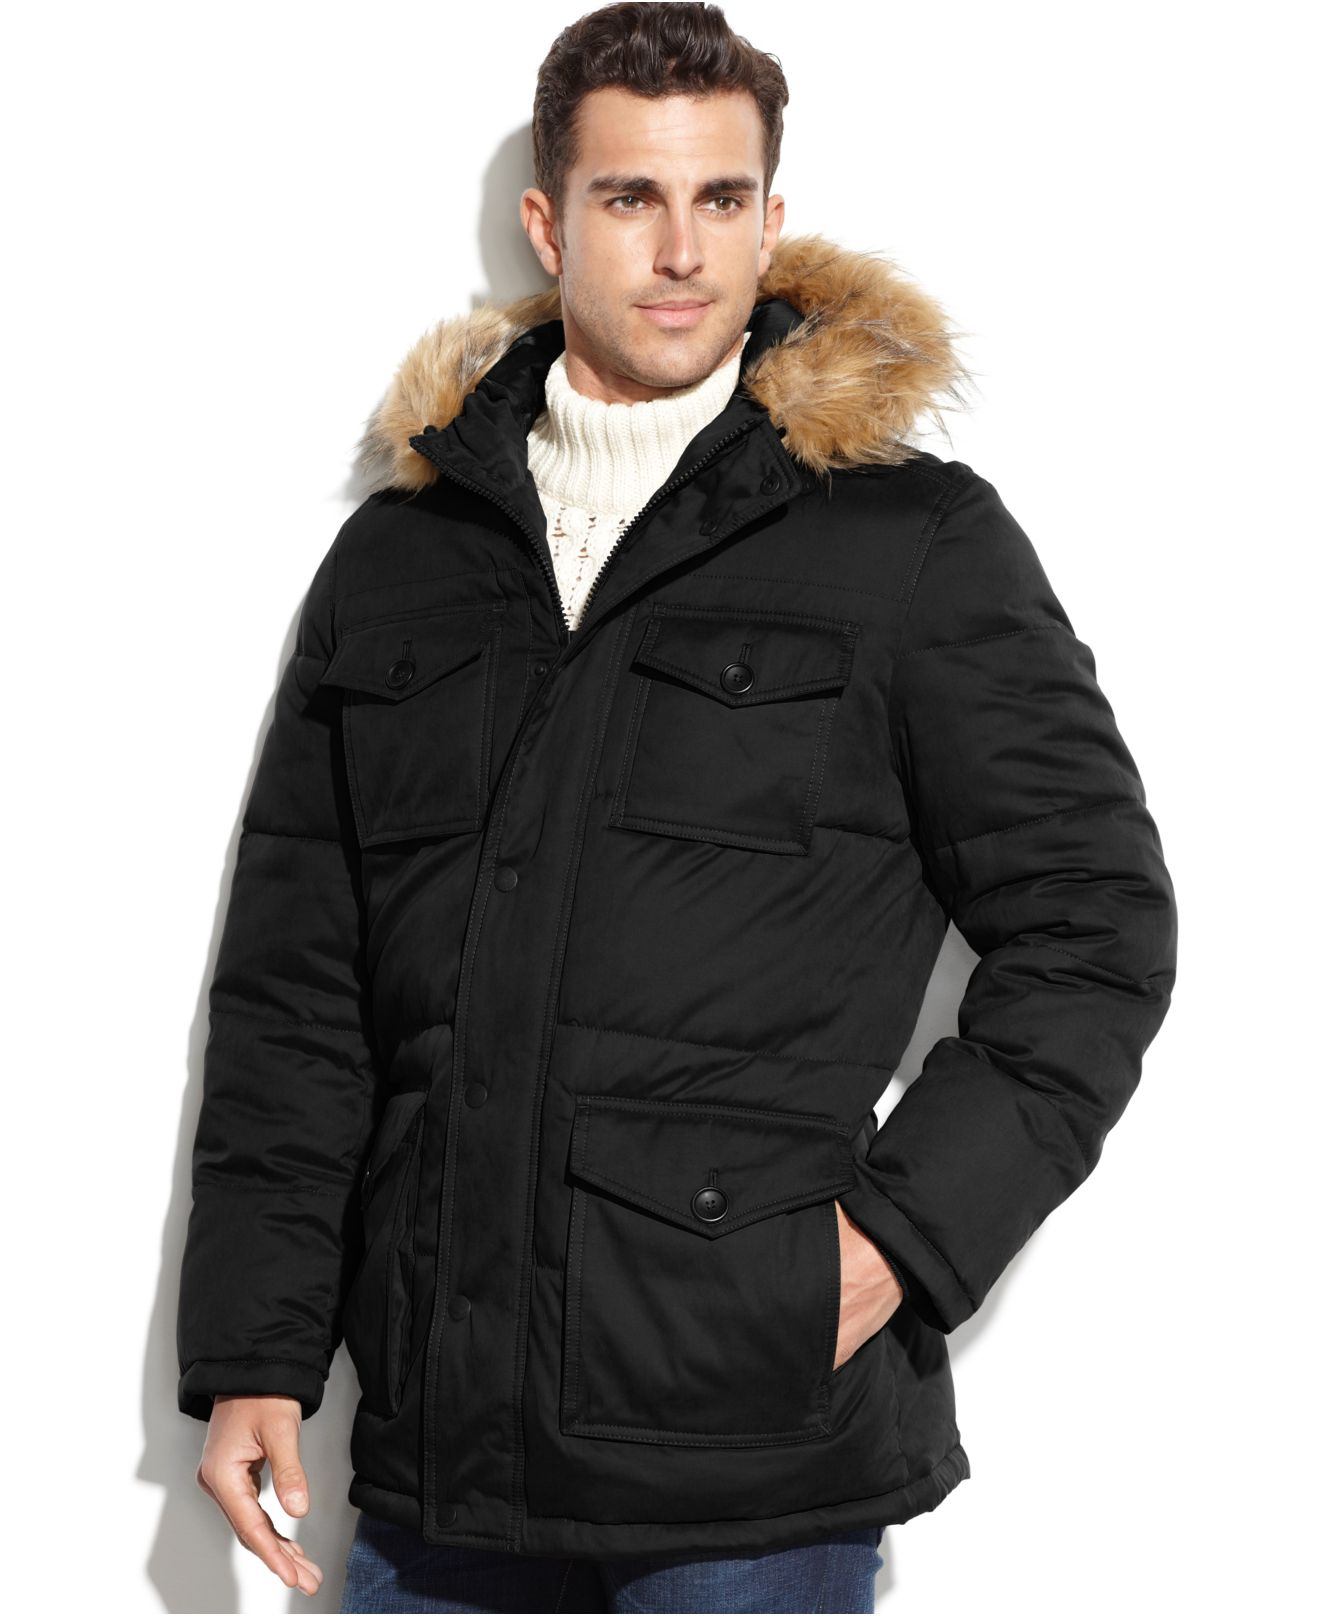 tommy hilfiger jacket with fur hood